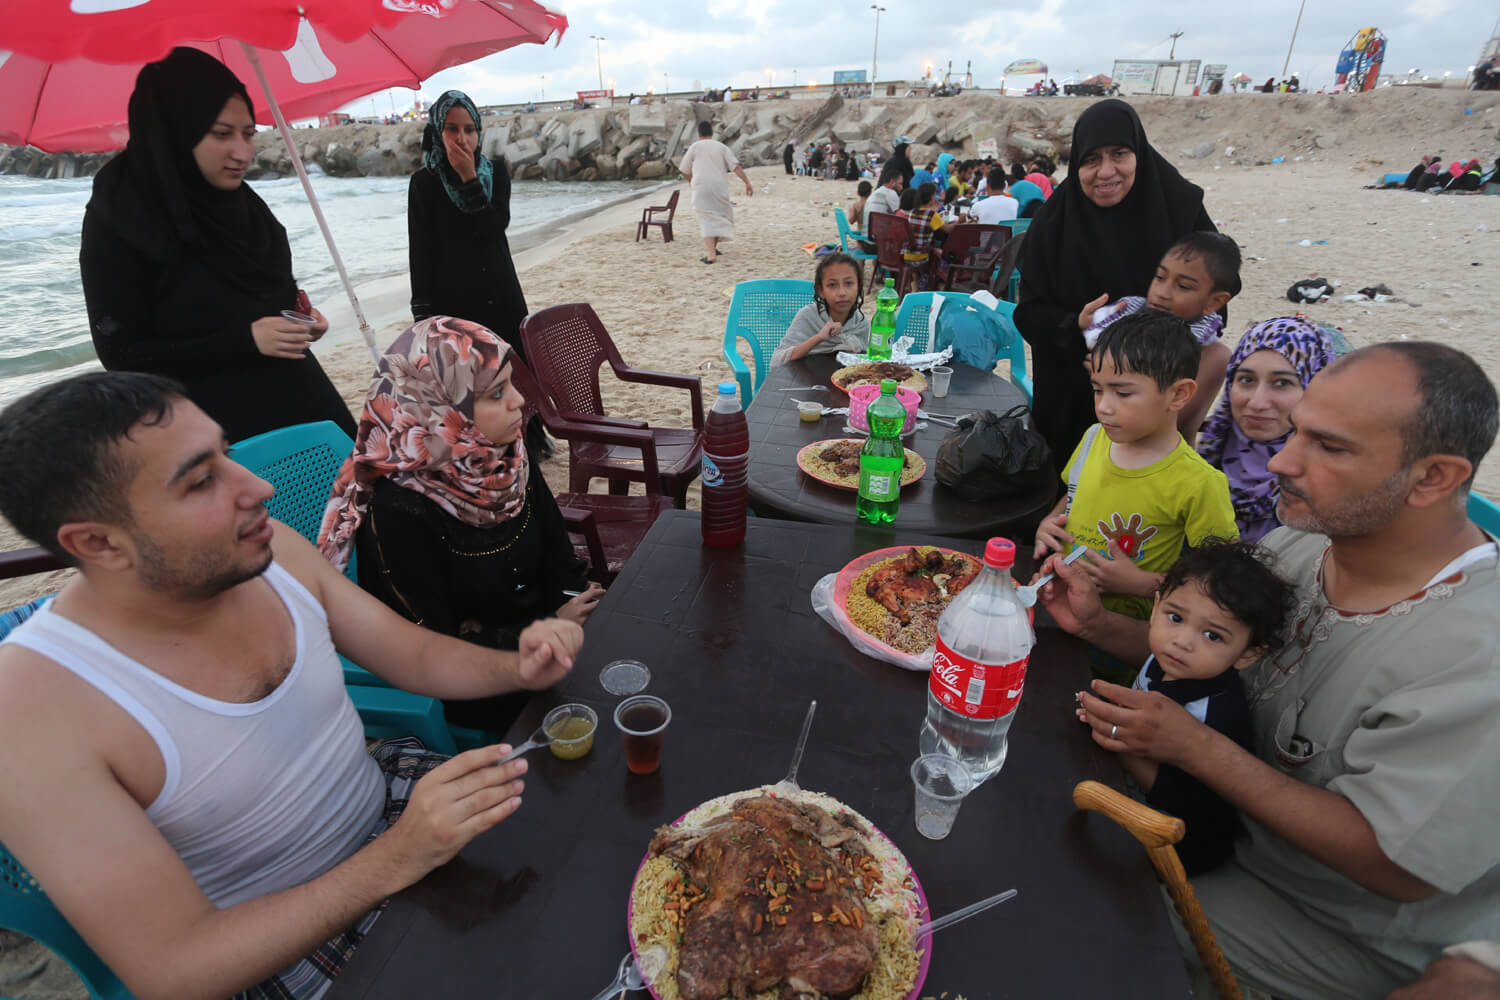 The Al-Rafaty family shares a seaside breakfast in Gaza, June 27, 2016. (Photo: Mohammed Asad)